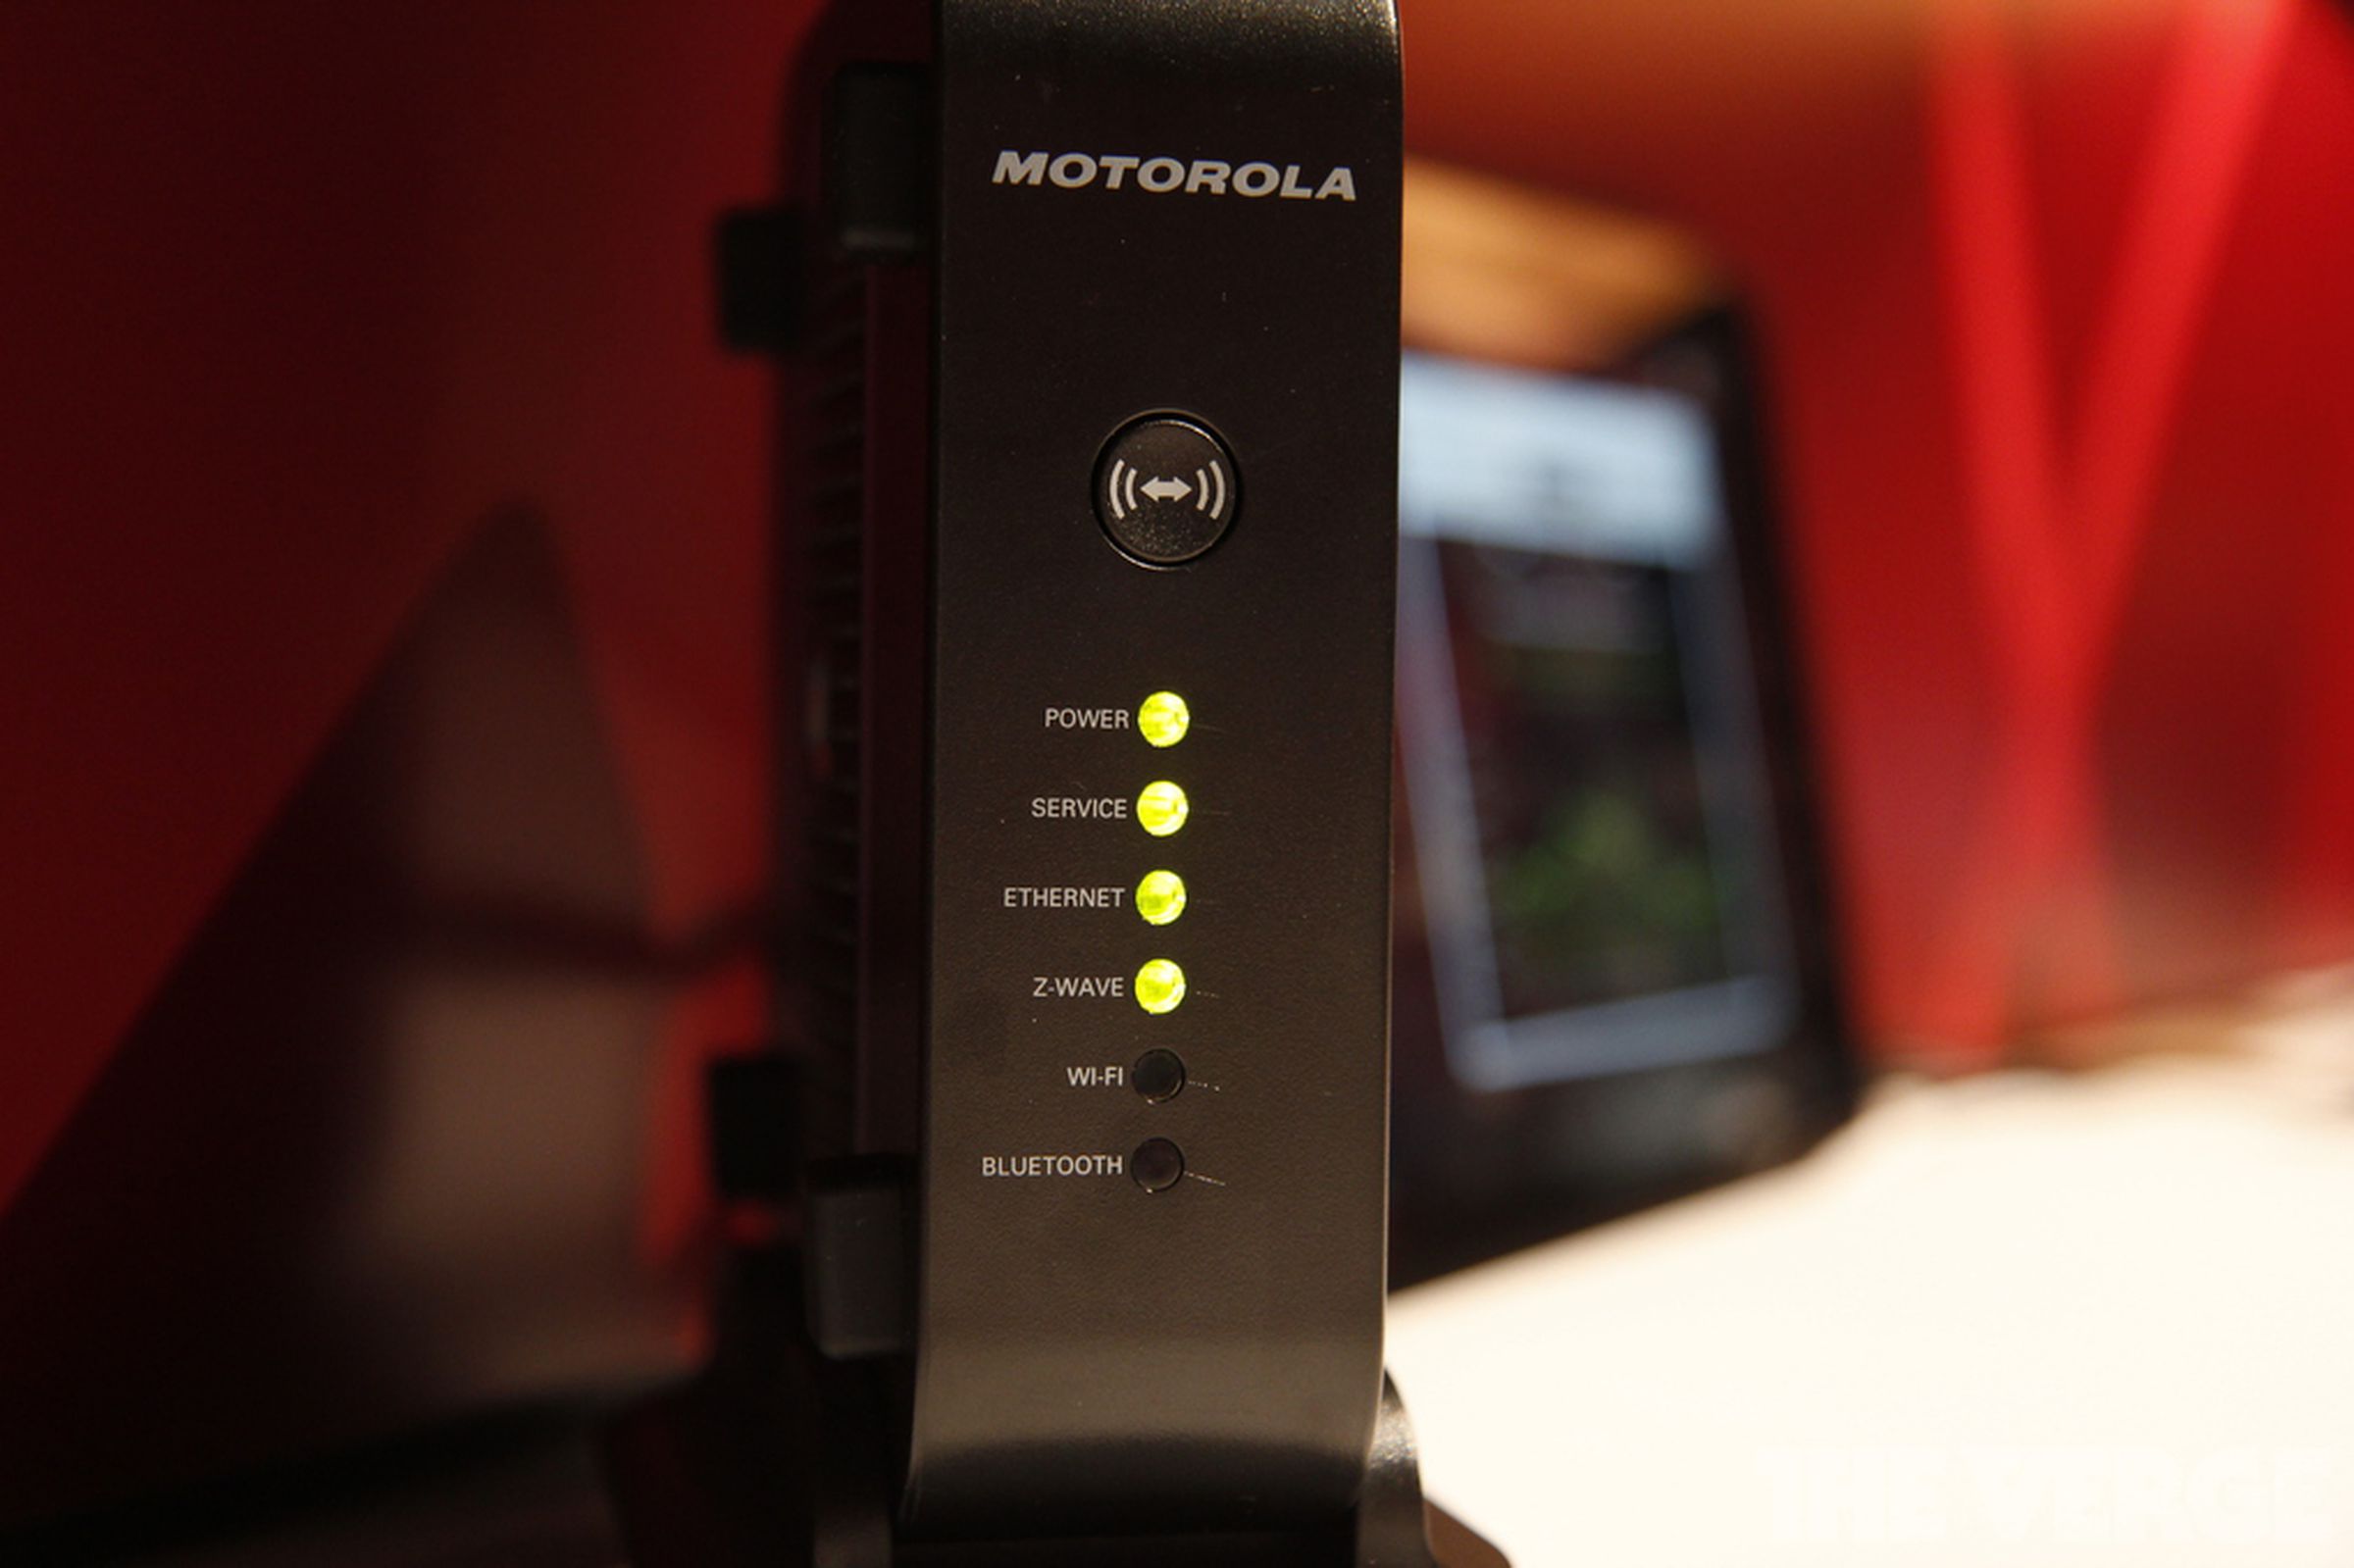 Motorola Home Gateway hands-on photos